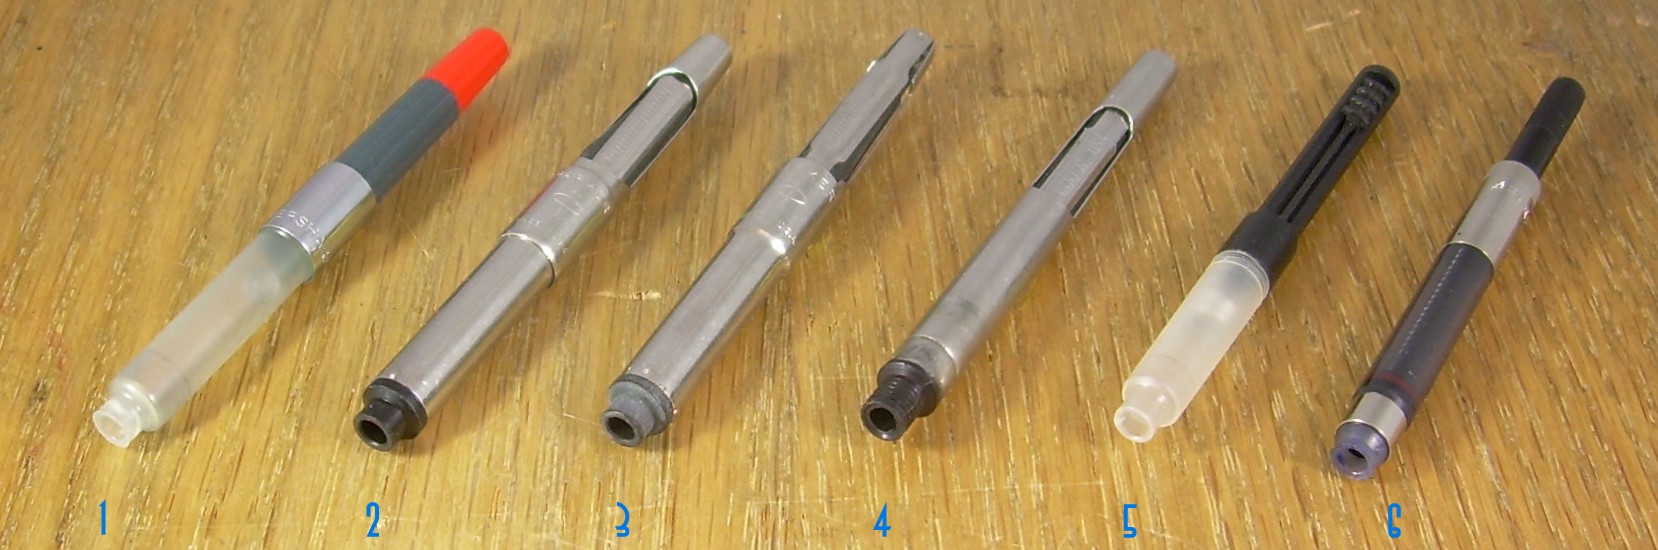 5 Set Parker Fountain Pen Ink Converter Slide or Push Piston Fill Ink Cartridge